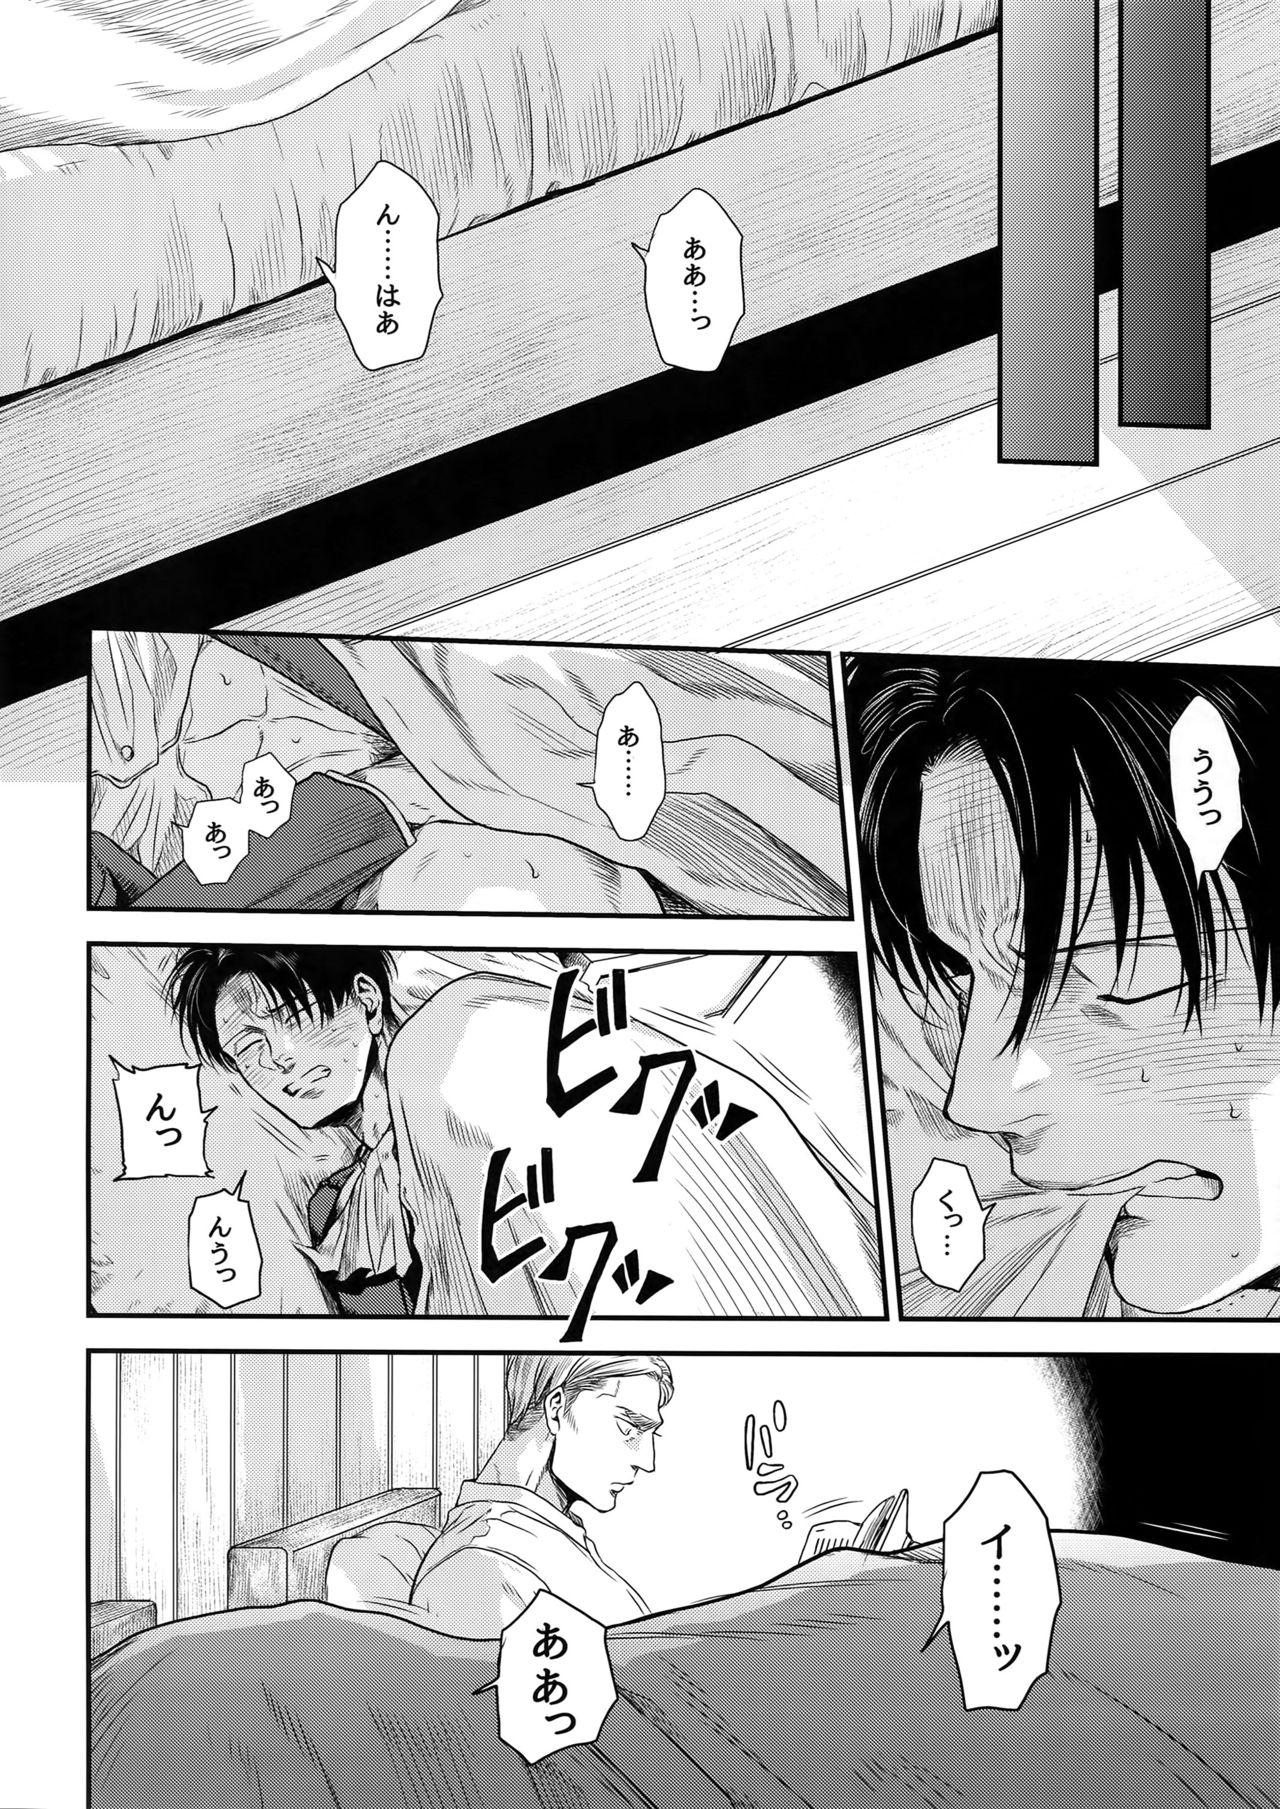 Motel continuance - Shingeki no kyojin Gloryholes - Page 11